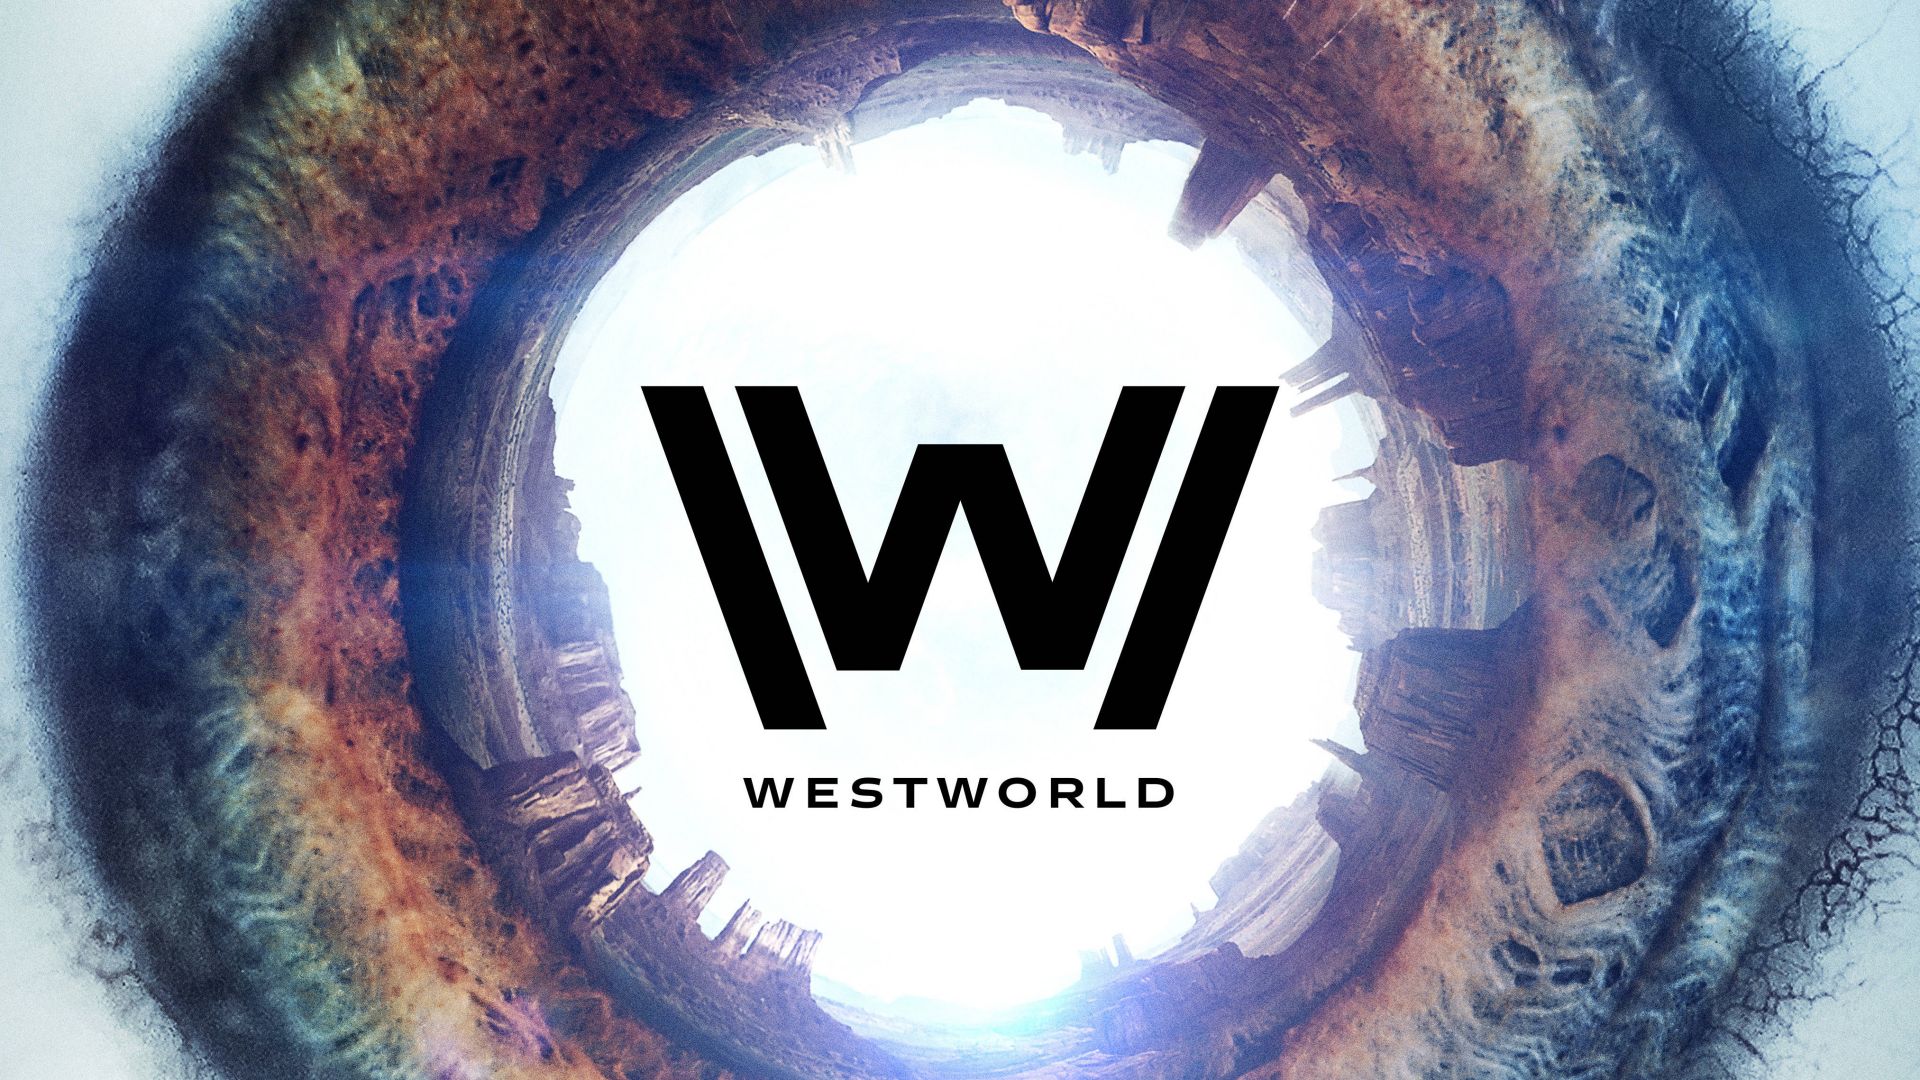 Мир Дикого запада сезон 2, Westworld Season 2, Logo, TV Series, 4K (horizontal)